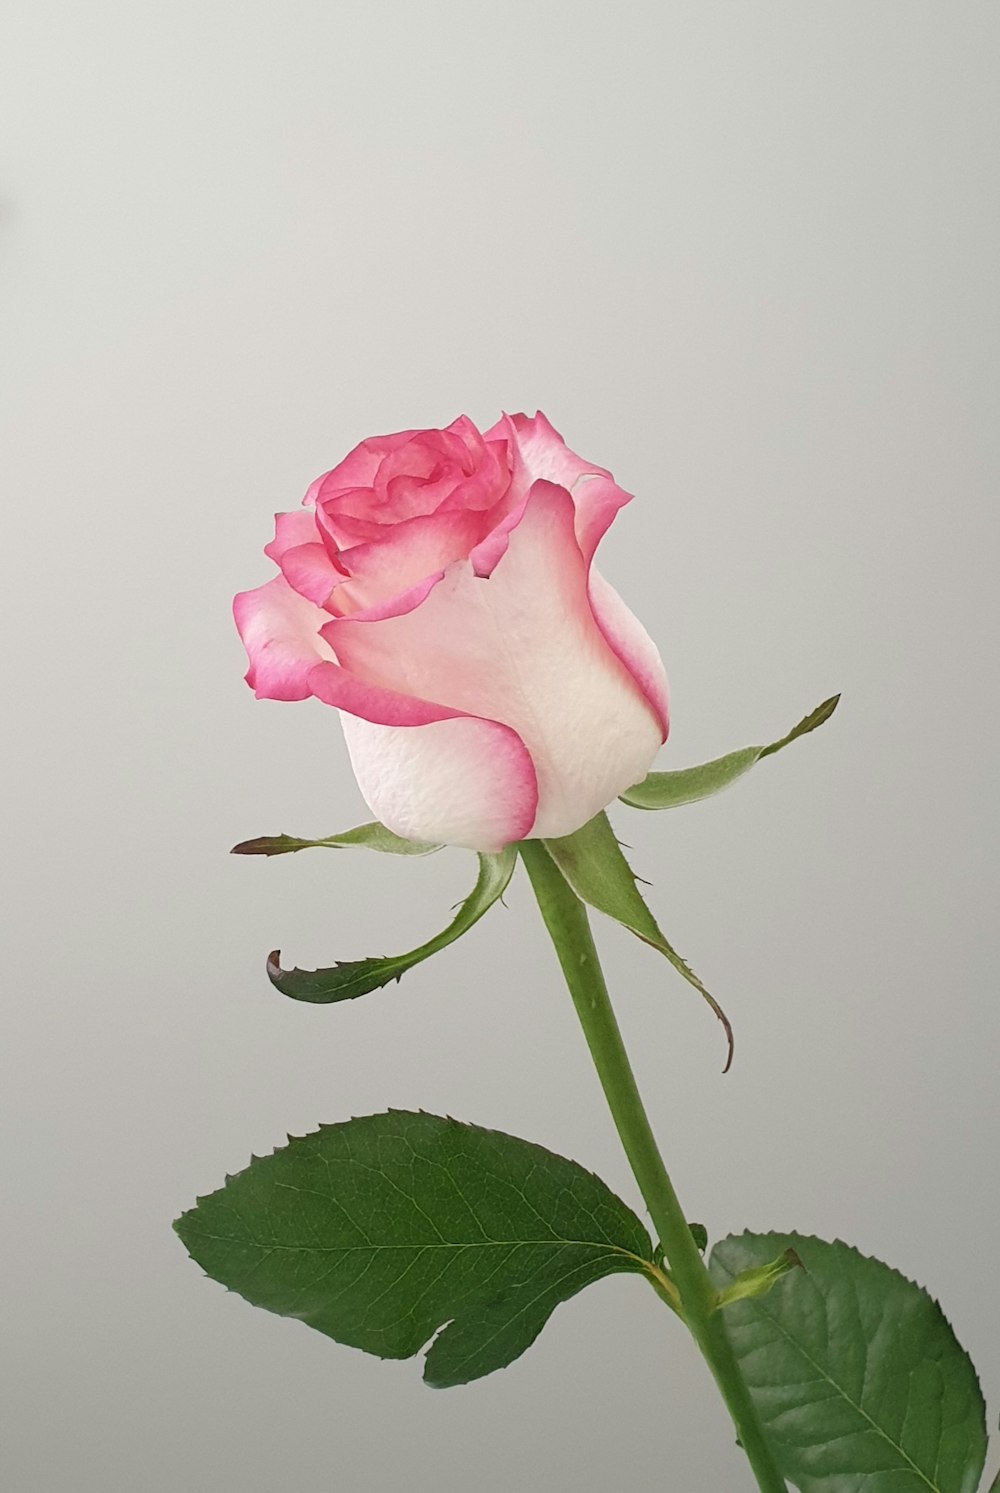 100+ Rose Flower Pictures | Download Free Images on Unsplash